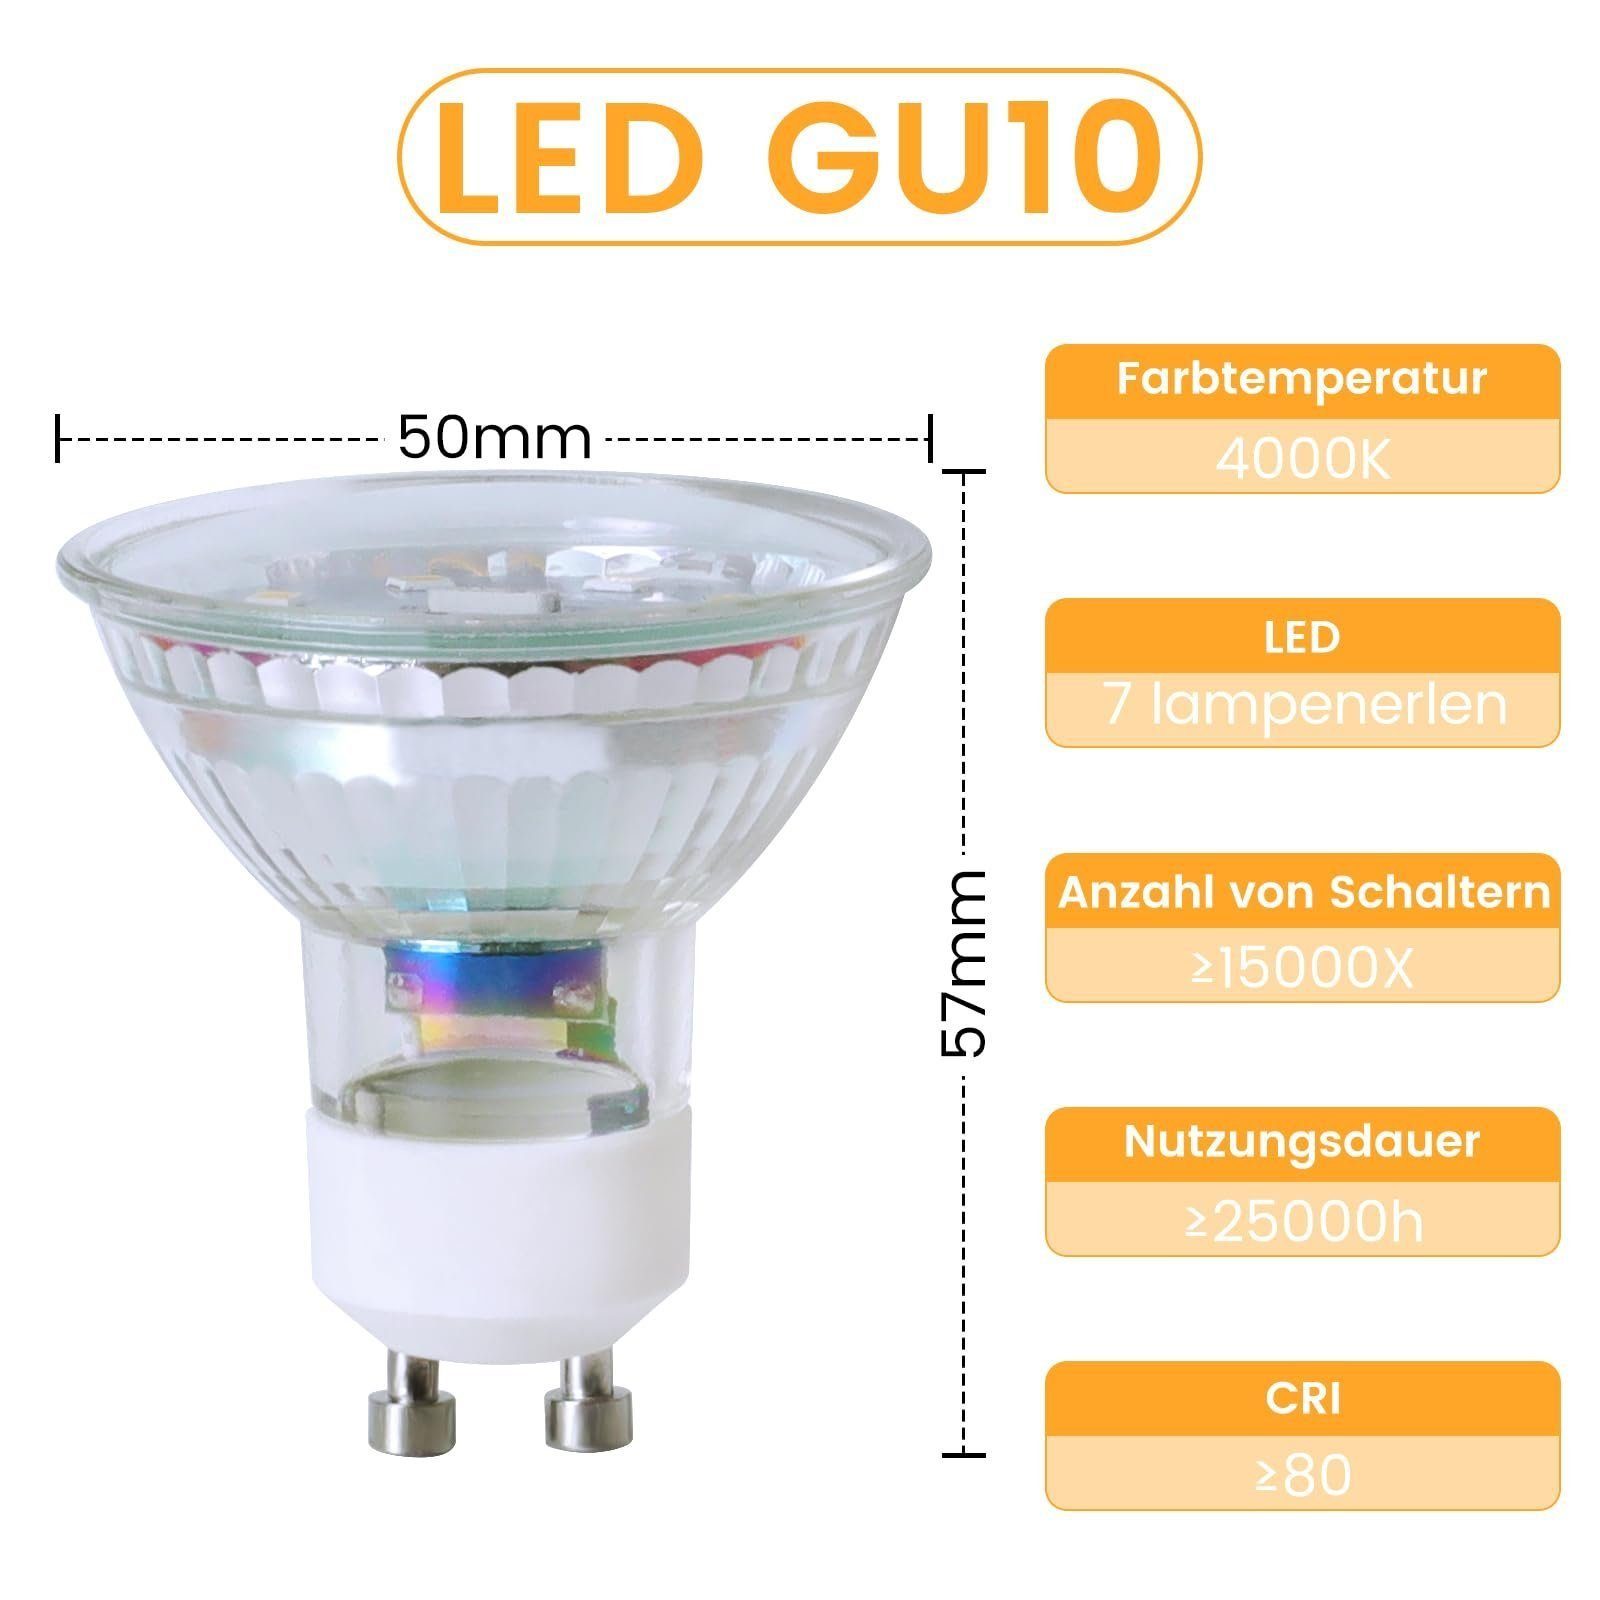 Nettlife LED-Leuchtmittel nicht GU10, 6 Neutralweiß 4.8W Glühlampe Energiesparlampe St., dimmbar, Abstrahlwinkel 110° LED